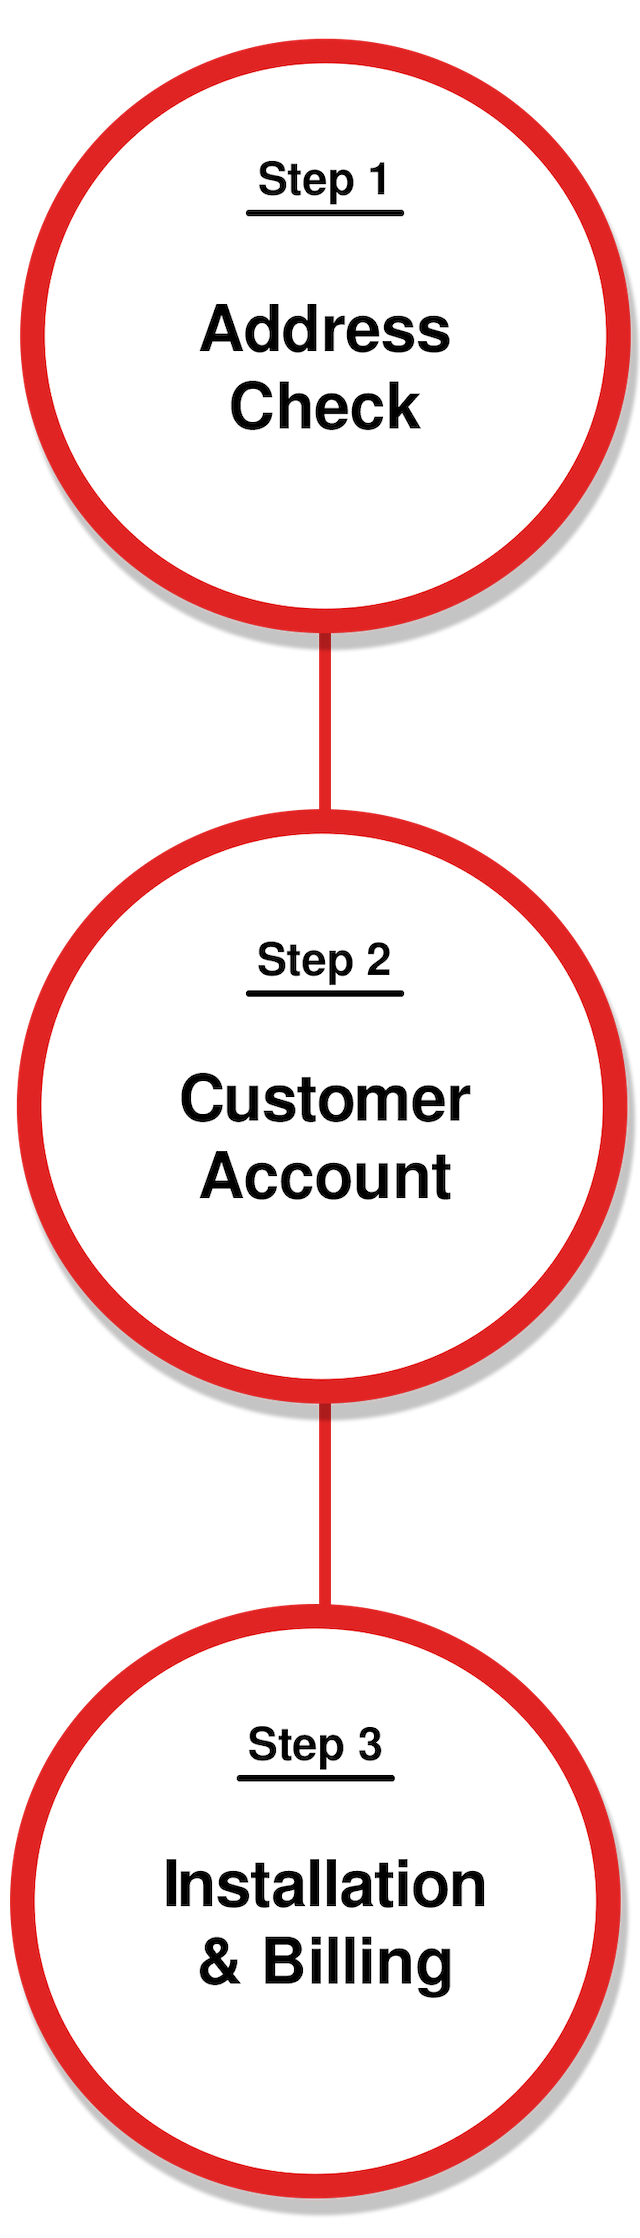 Step by step account setup process